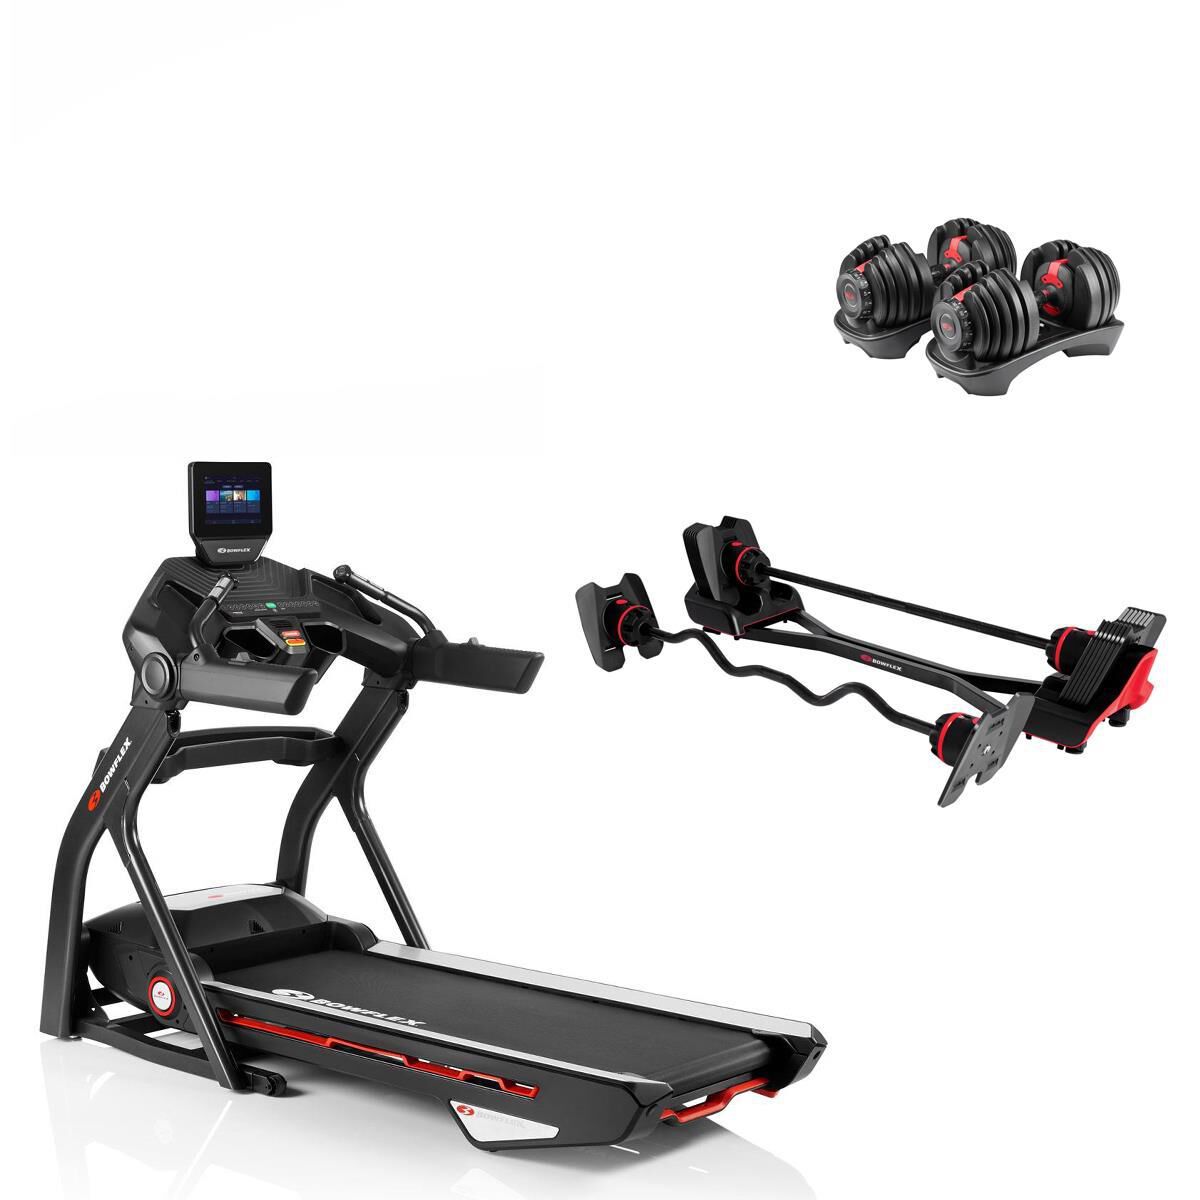 Bowflex Treadmill and Weights Bundle | NFM